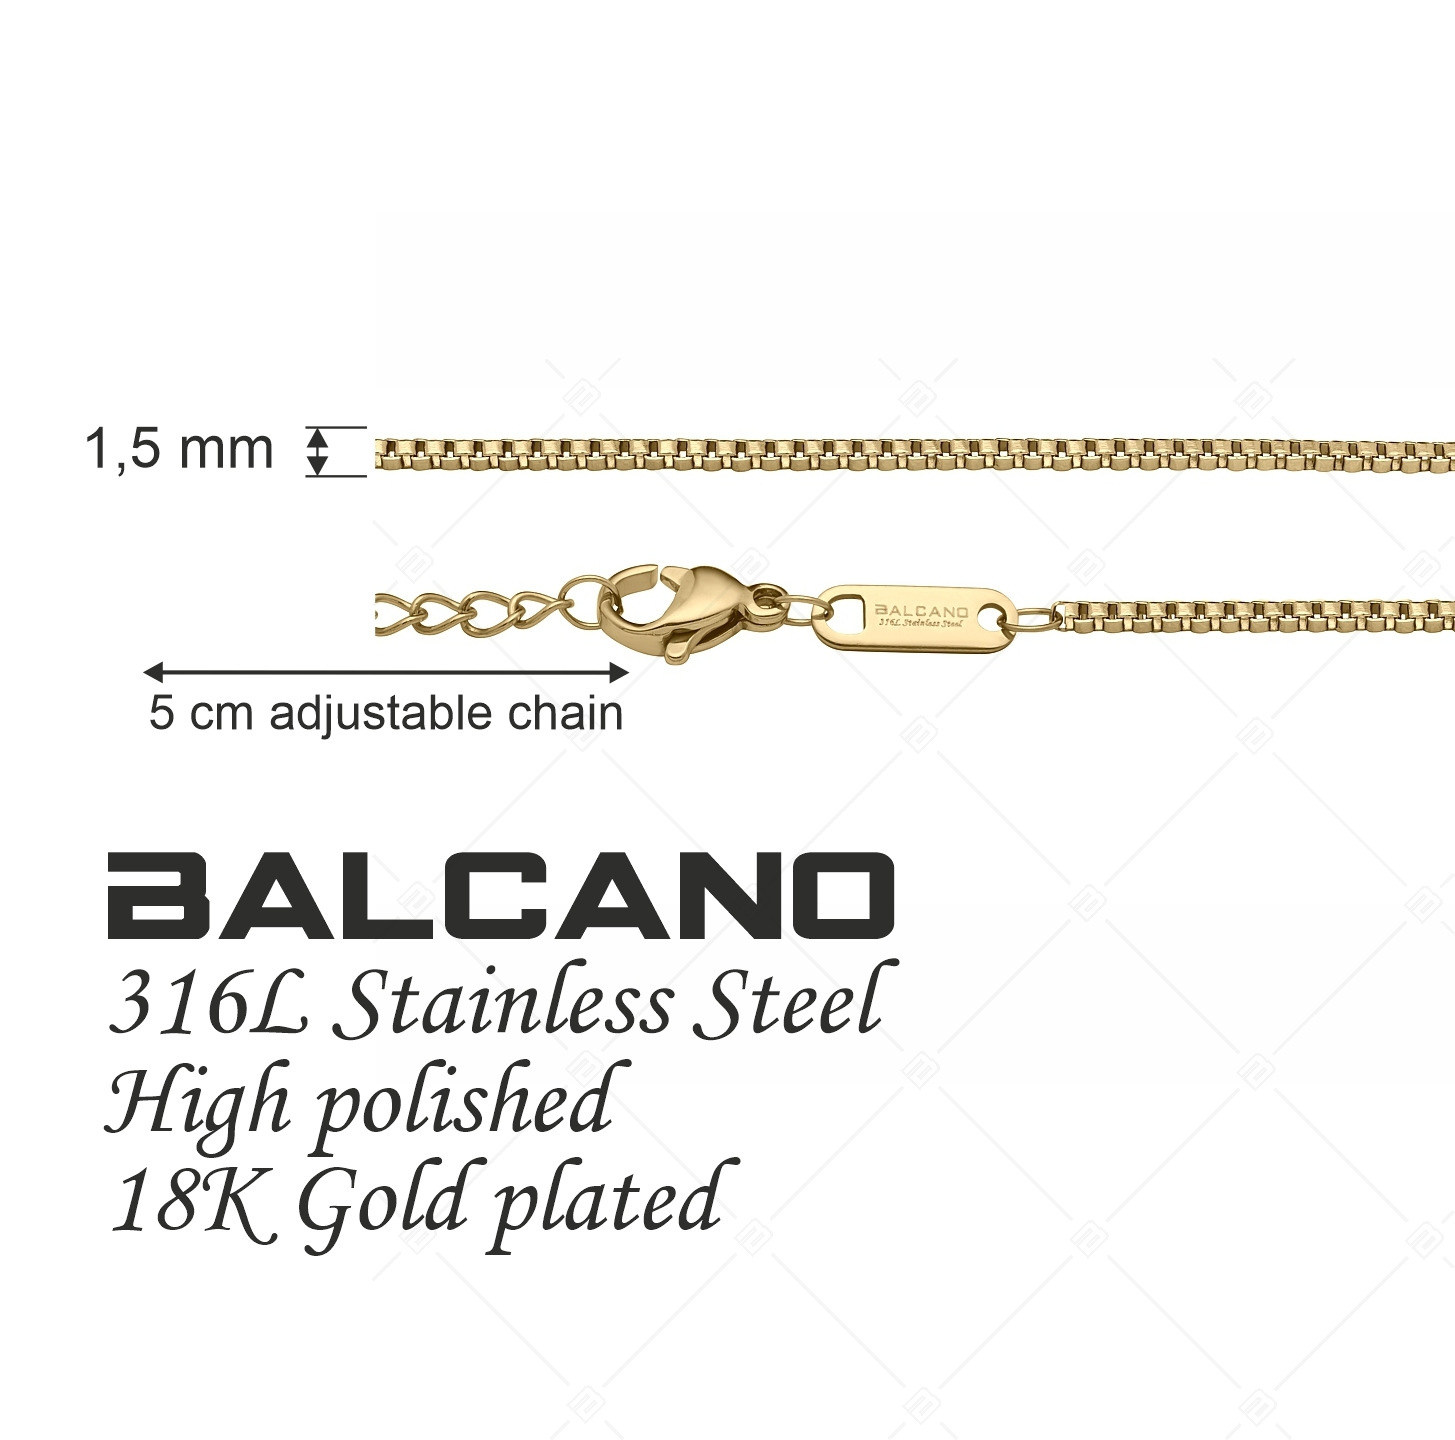 BALCANO - Venetian / Edelstahl Venezianer Kette mit 18K Vergoldung - 1,5 mm (341292BC88)